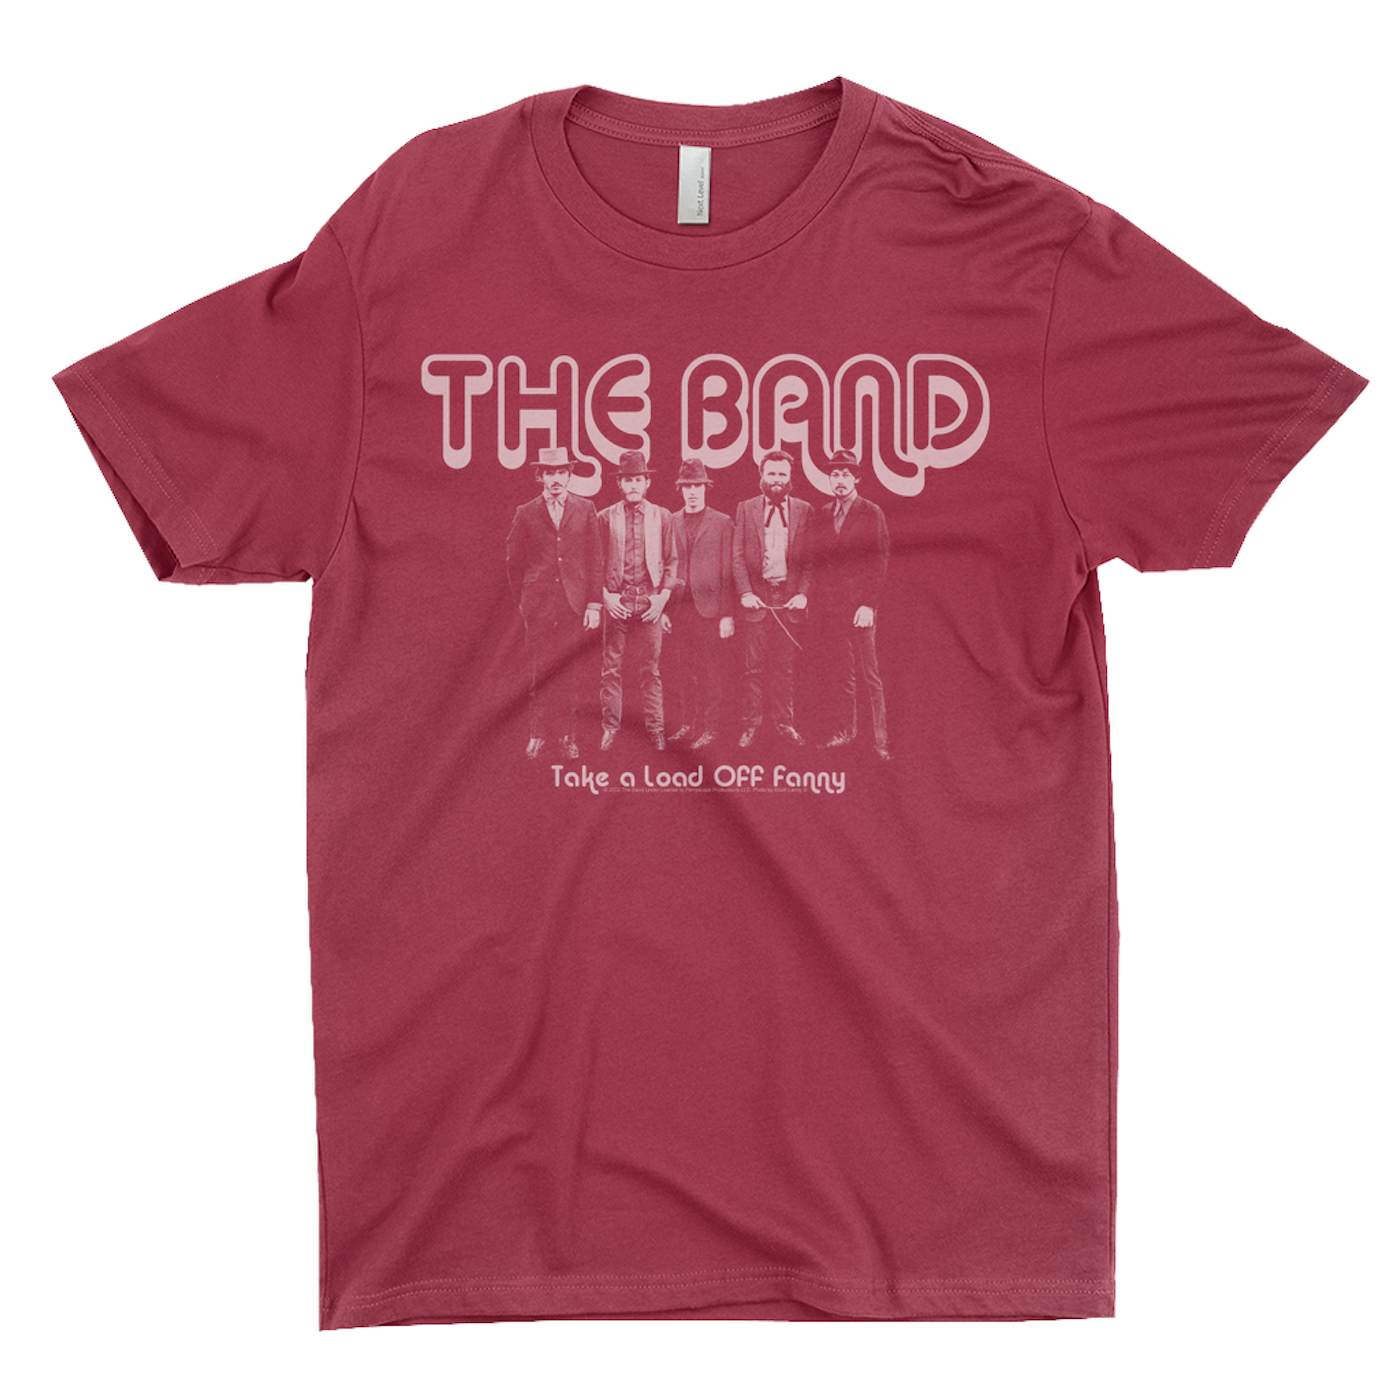 The Band T-Shirt | Take A Load Off Fanny Image The Band Shirt